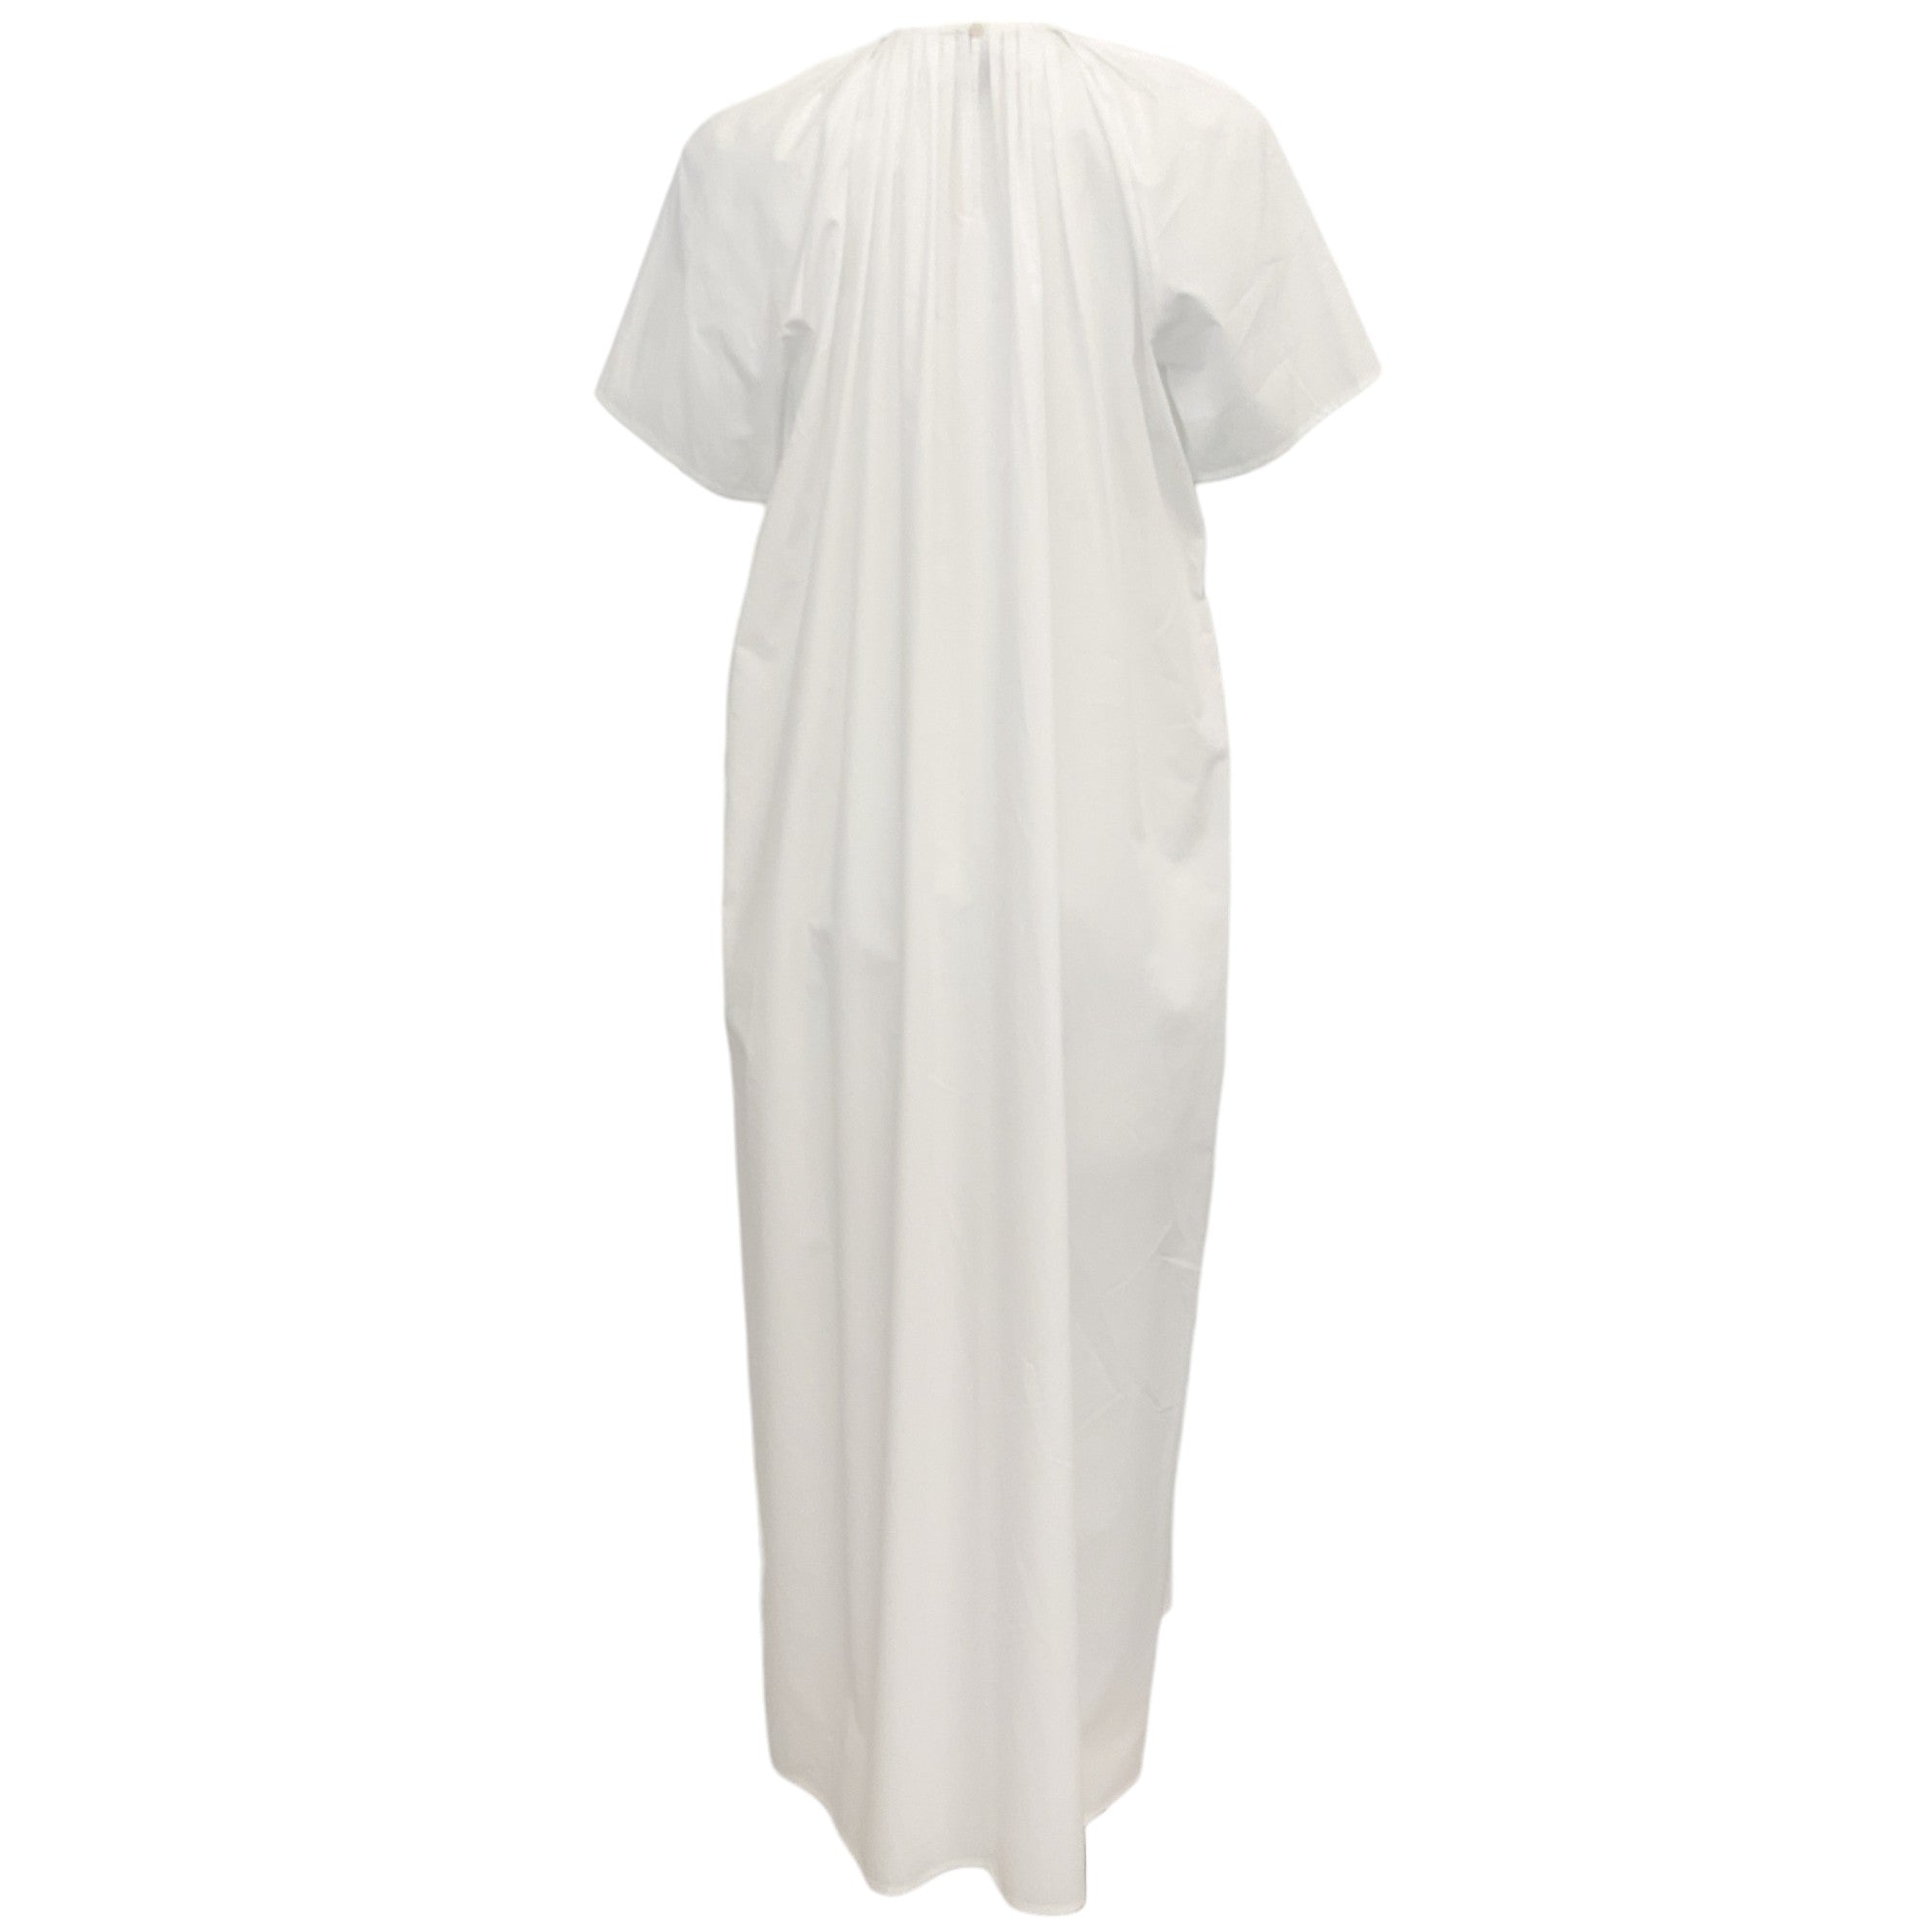 La Collection White Cotton Short Sleeved Maxi Dress